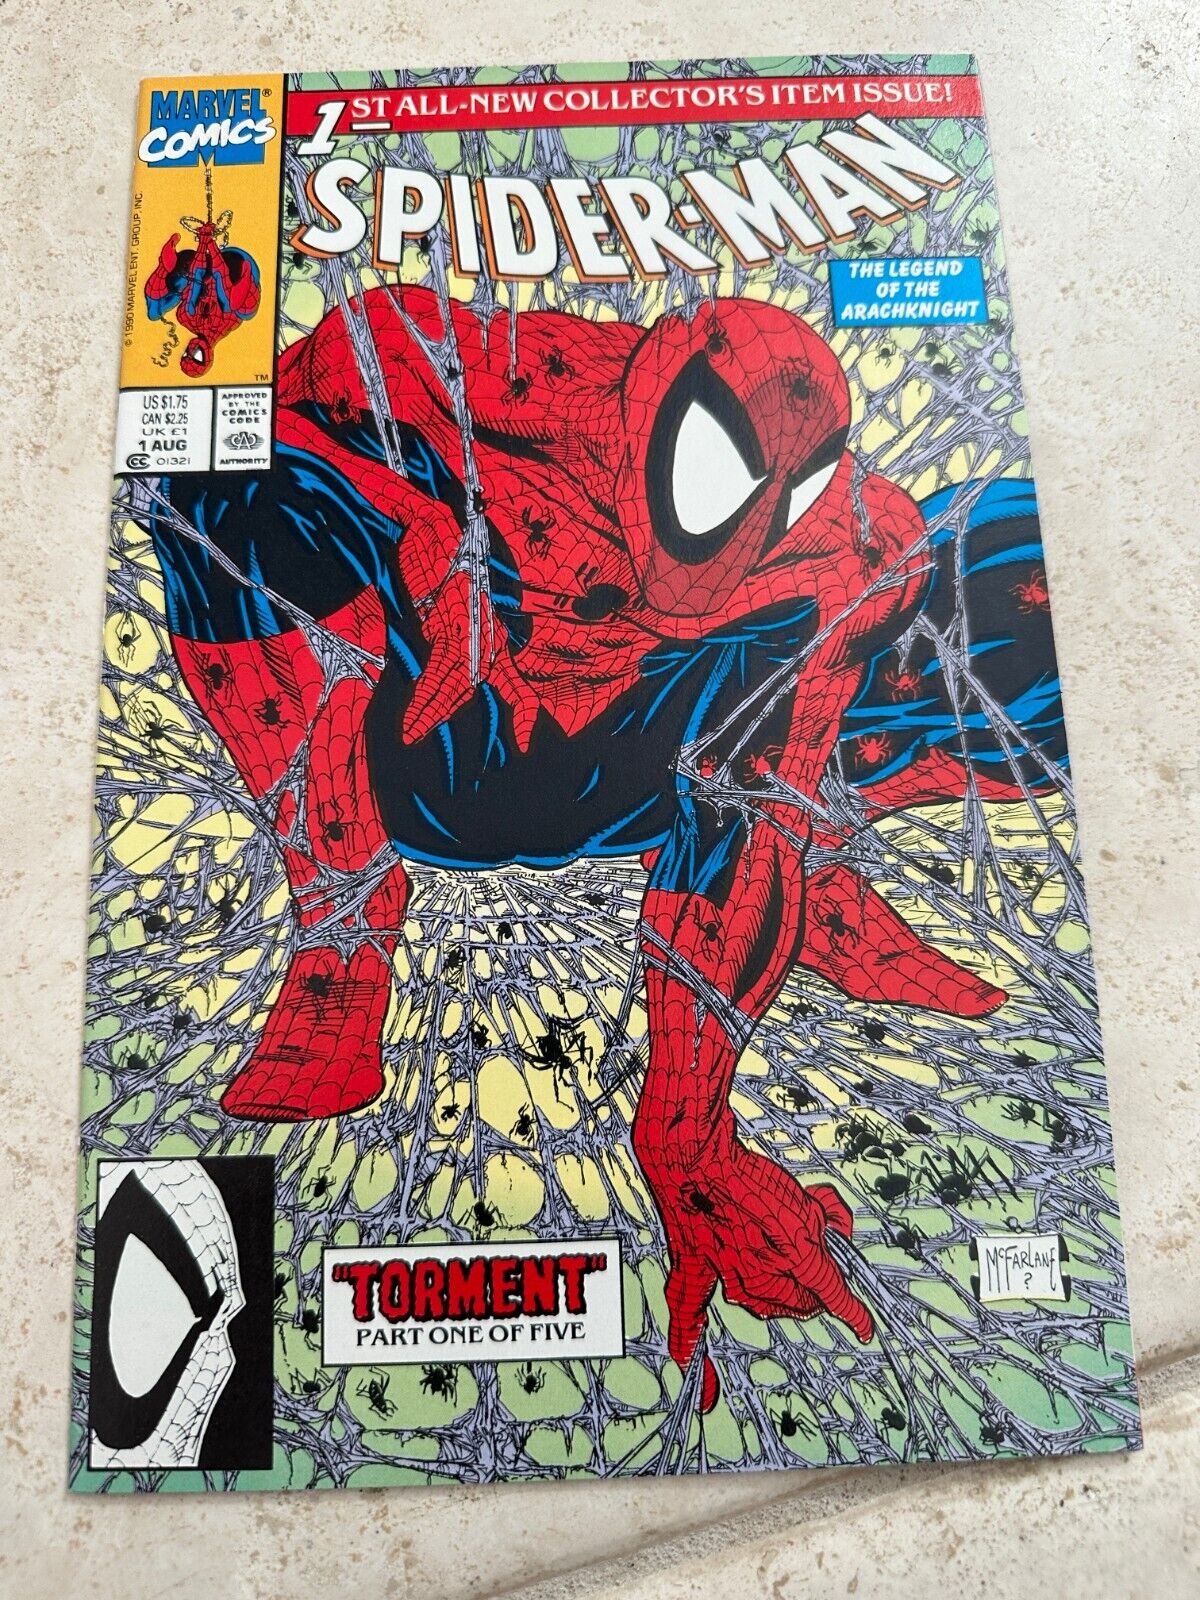 SPIDER-MAN Todd McFarlane YOU CHOOSE Marvel NM- high grade amazing spiderman CGC